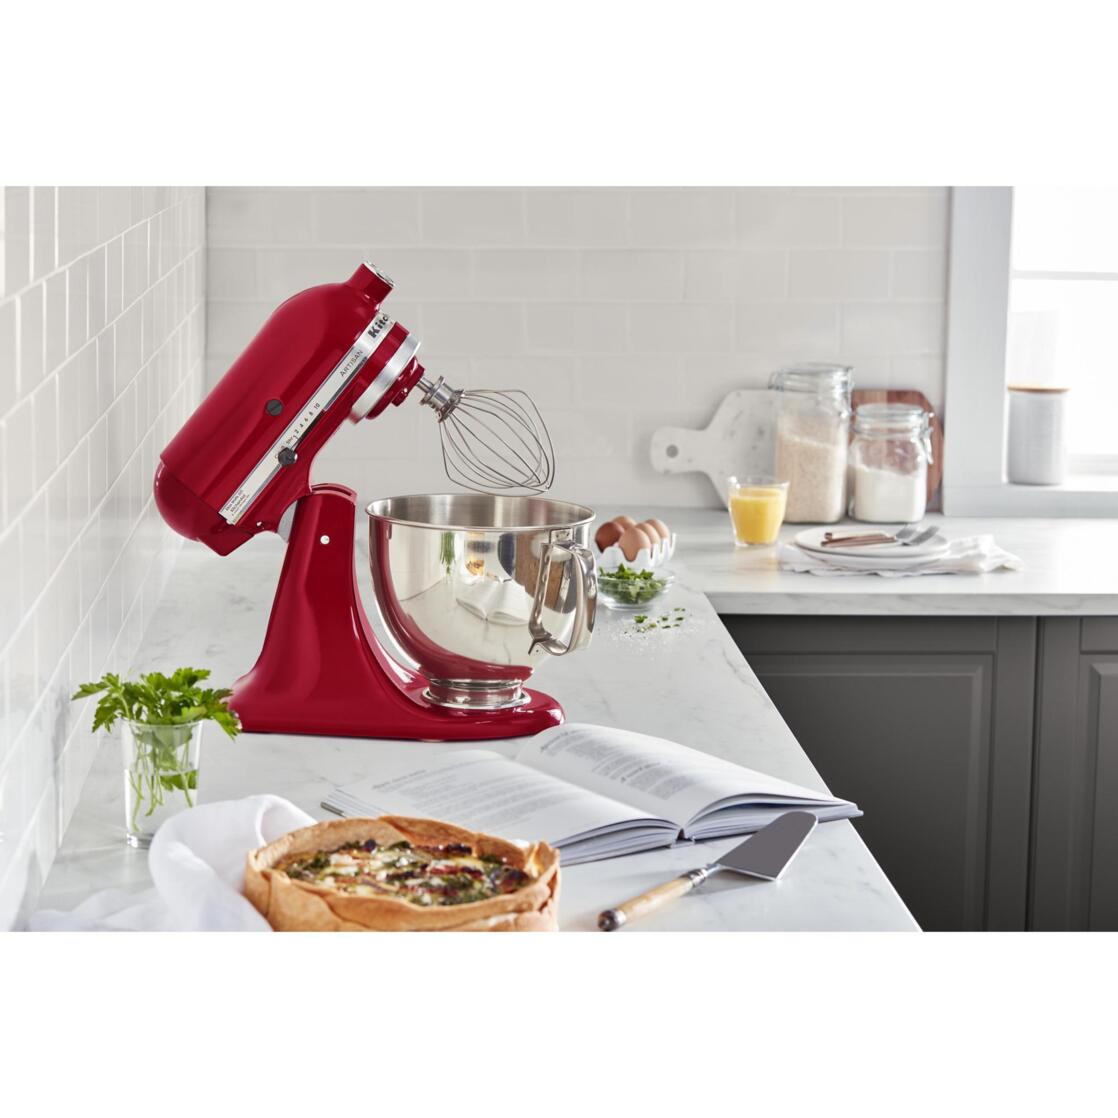 KitchenAid® Artisan® Series 5 Quart Tilt-Head Stand Mixer, Empire Red, KSM150PS - image 8 of 9